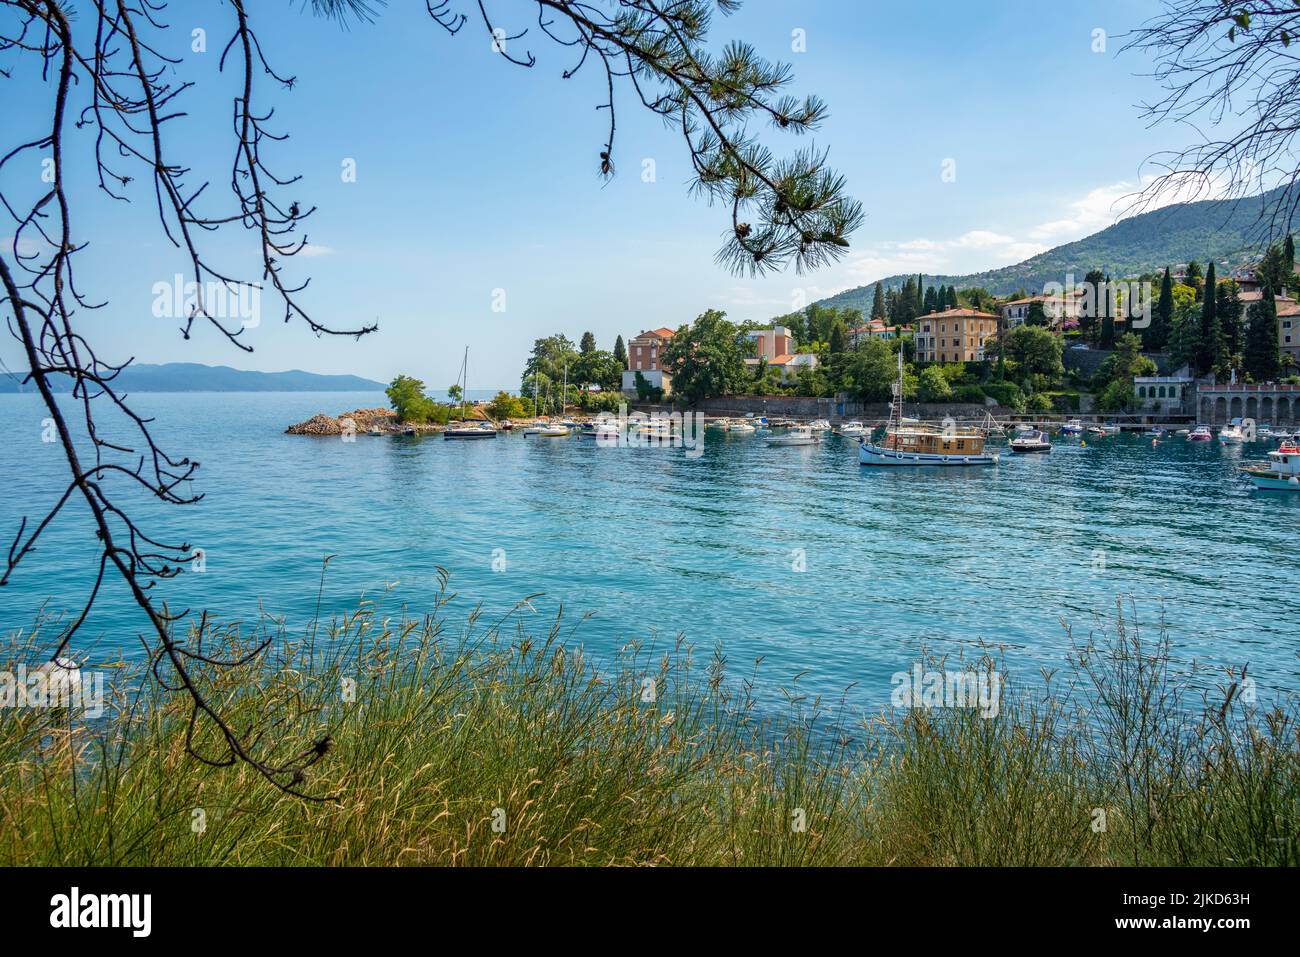 View of boats in the harbour at Ika, Ika, Kvarner Bay, Eastern Istria, Croatia, Europe Stock Photo